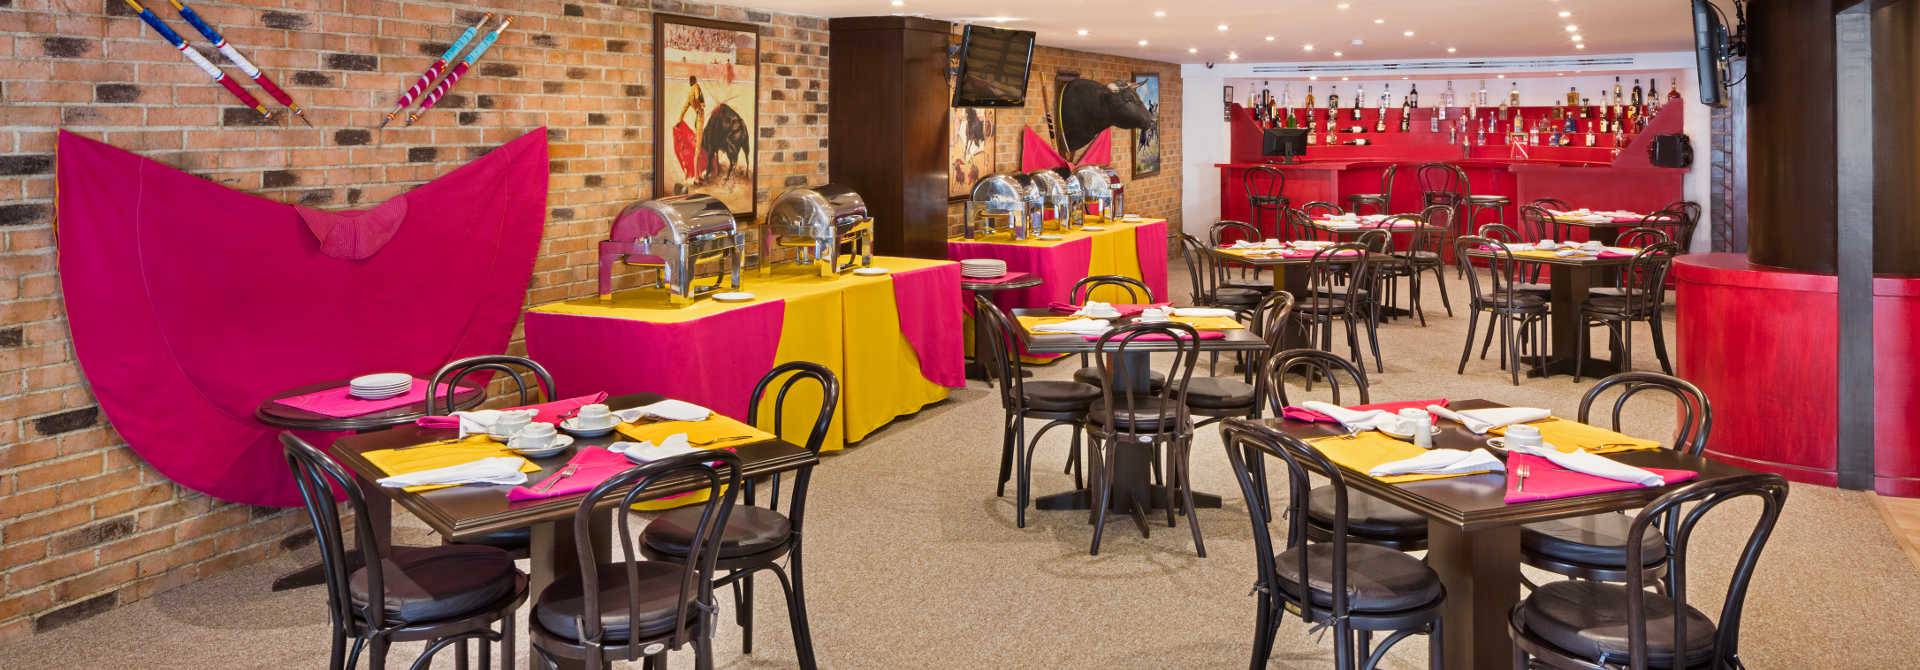 Capote restaurant & bar Hotel Francia Aguascalientes